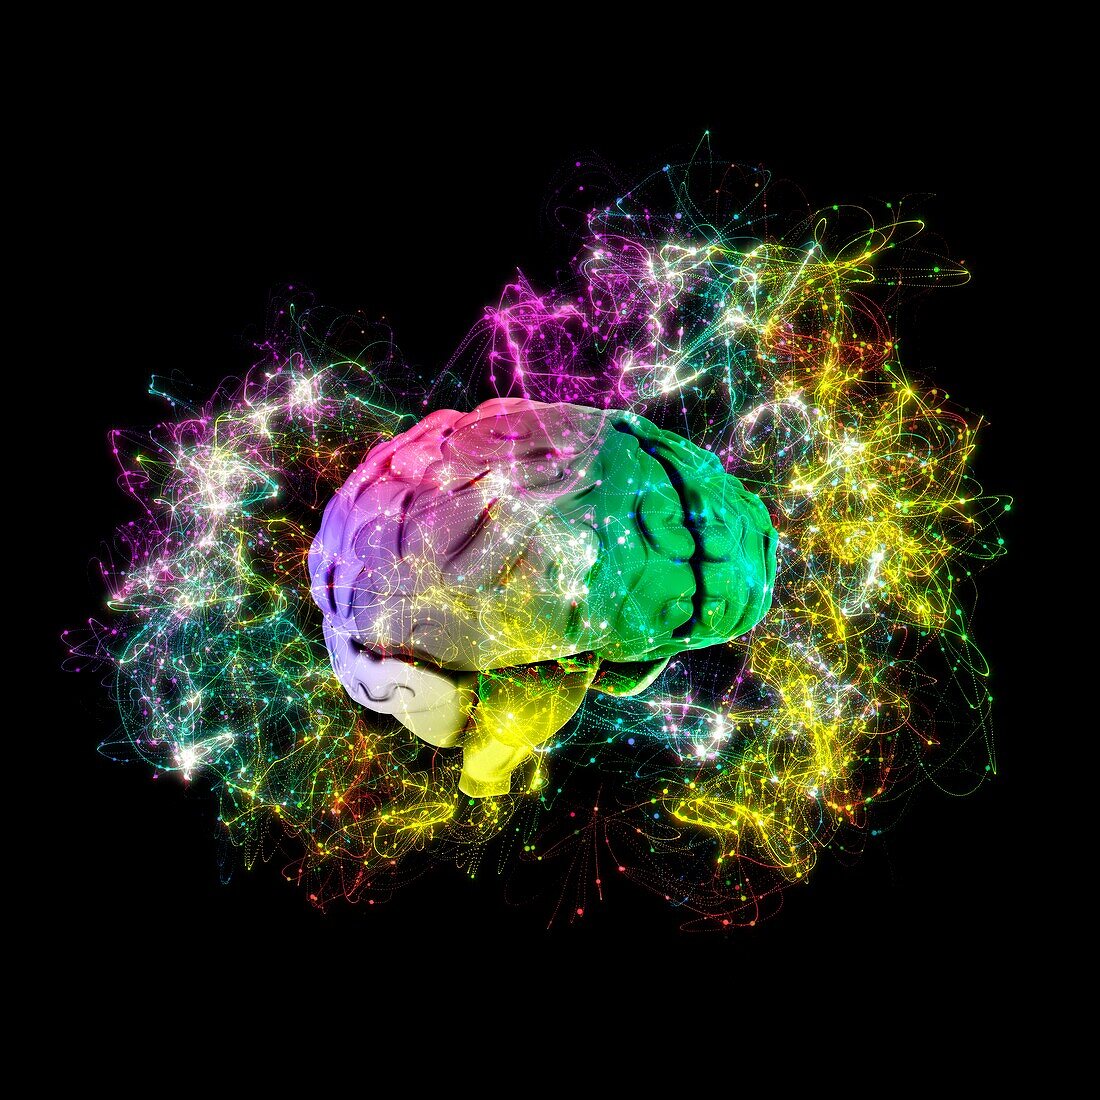 Human brain anatomy with energy field, 3D illustration